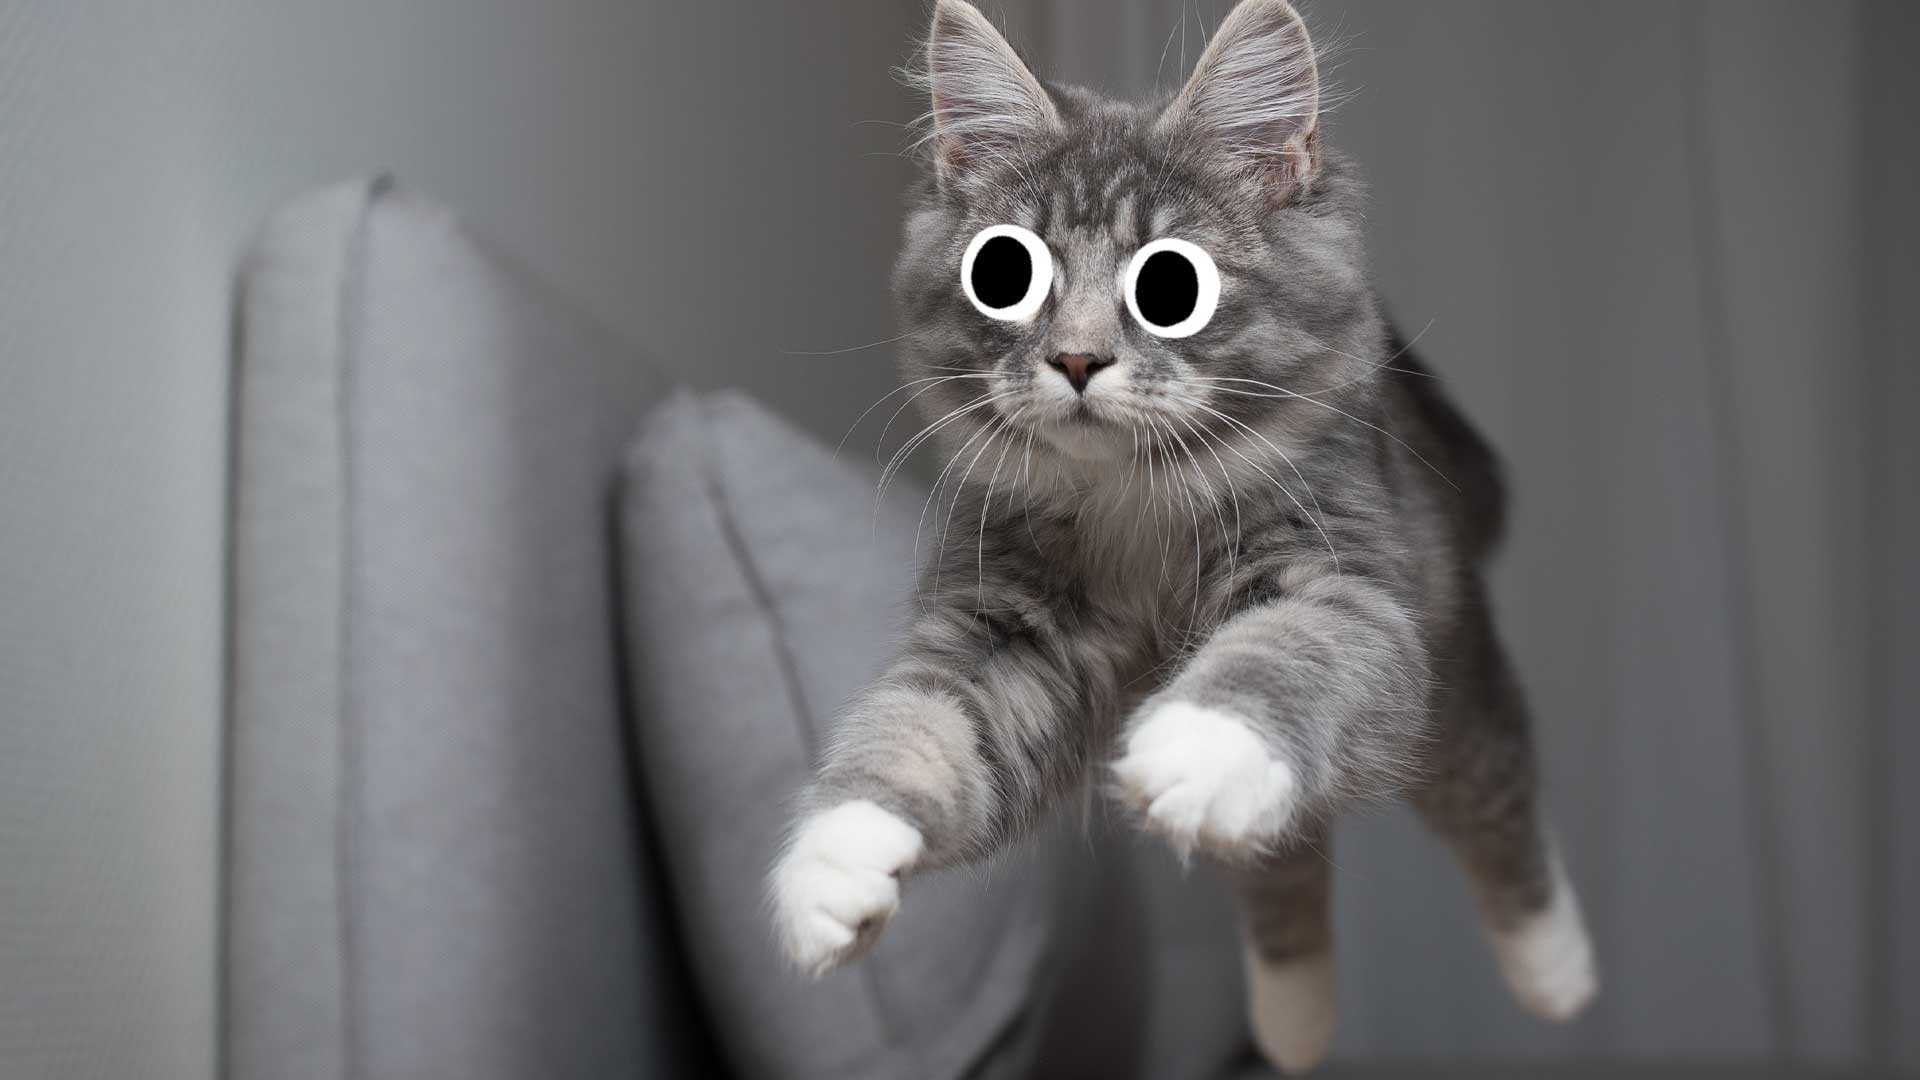 A cat jumping off a sofa